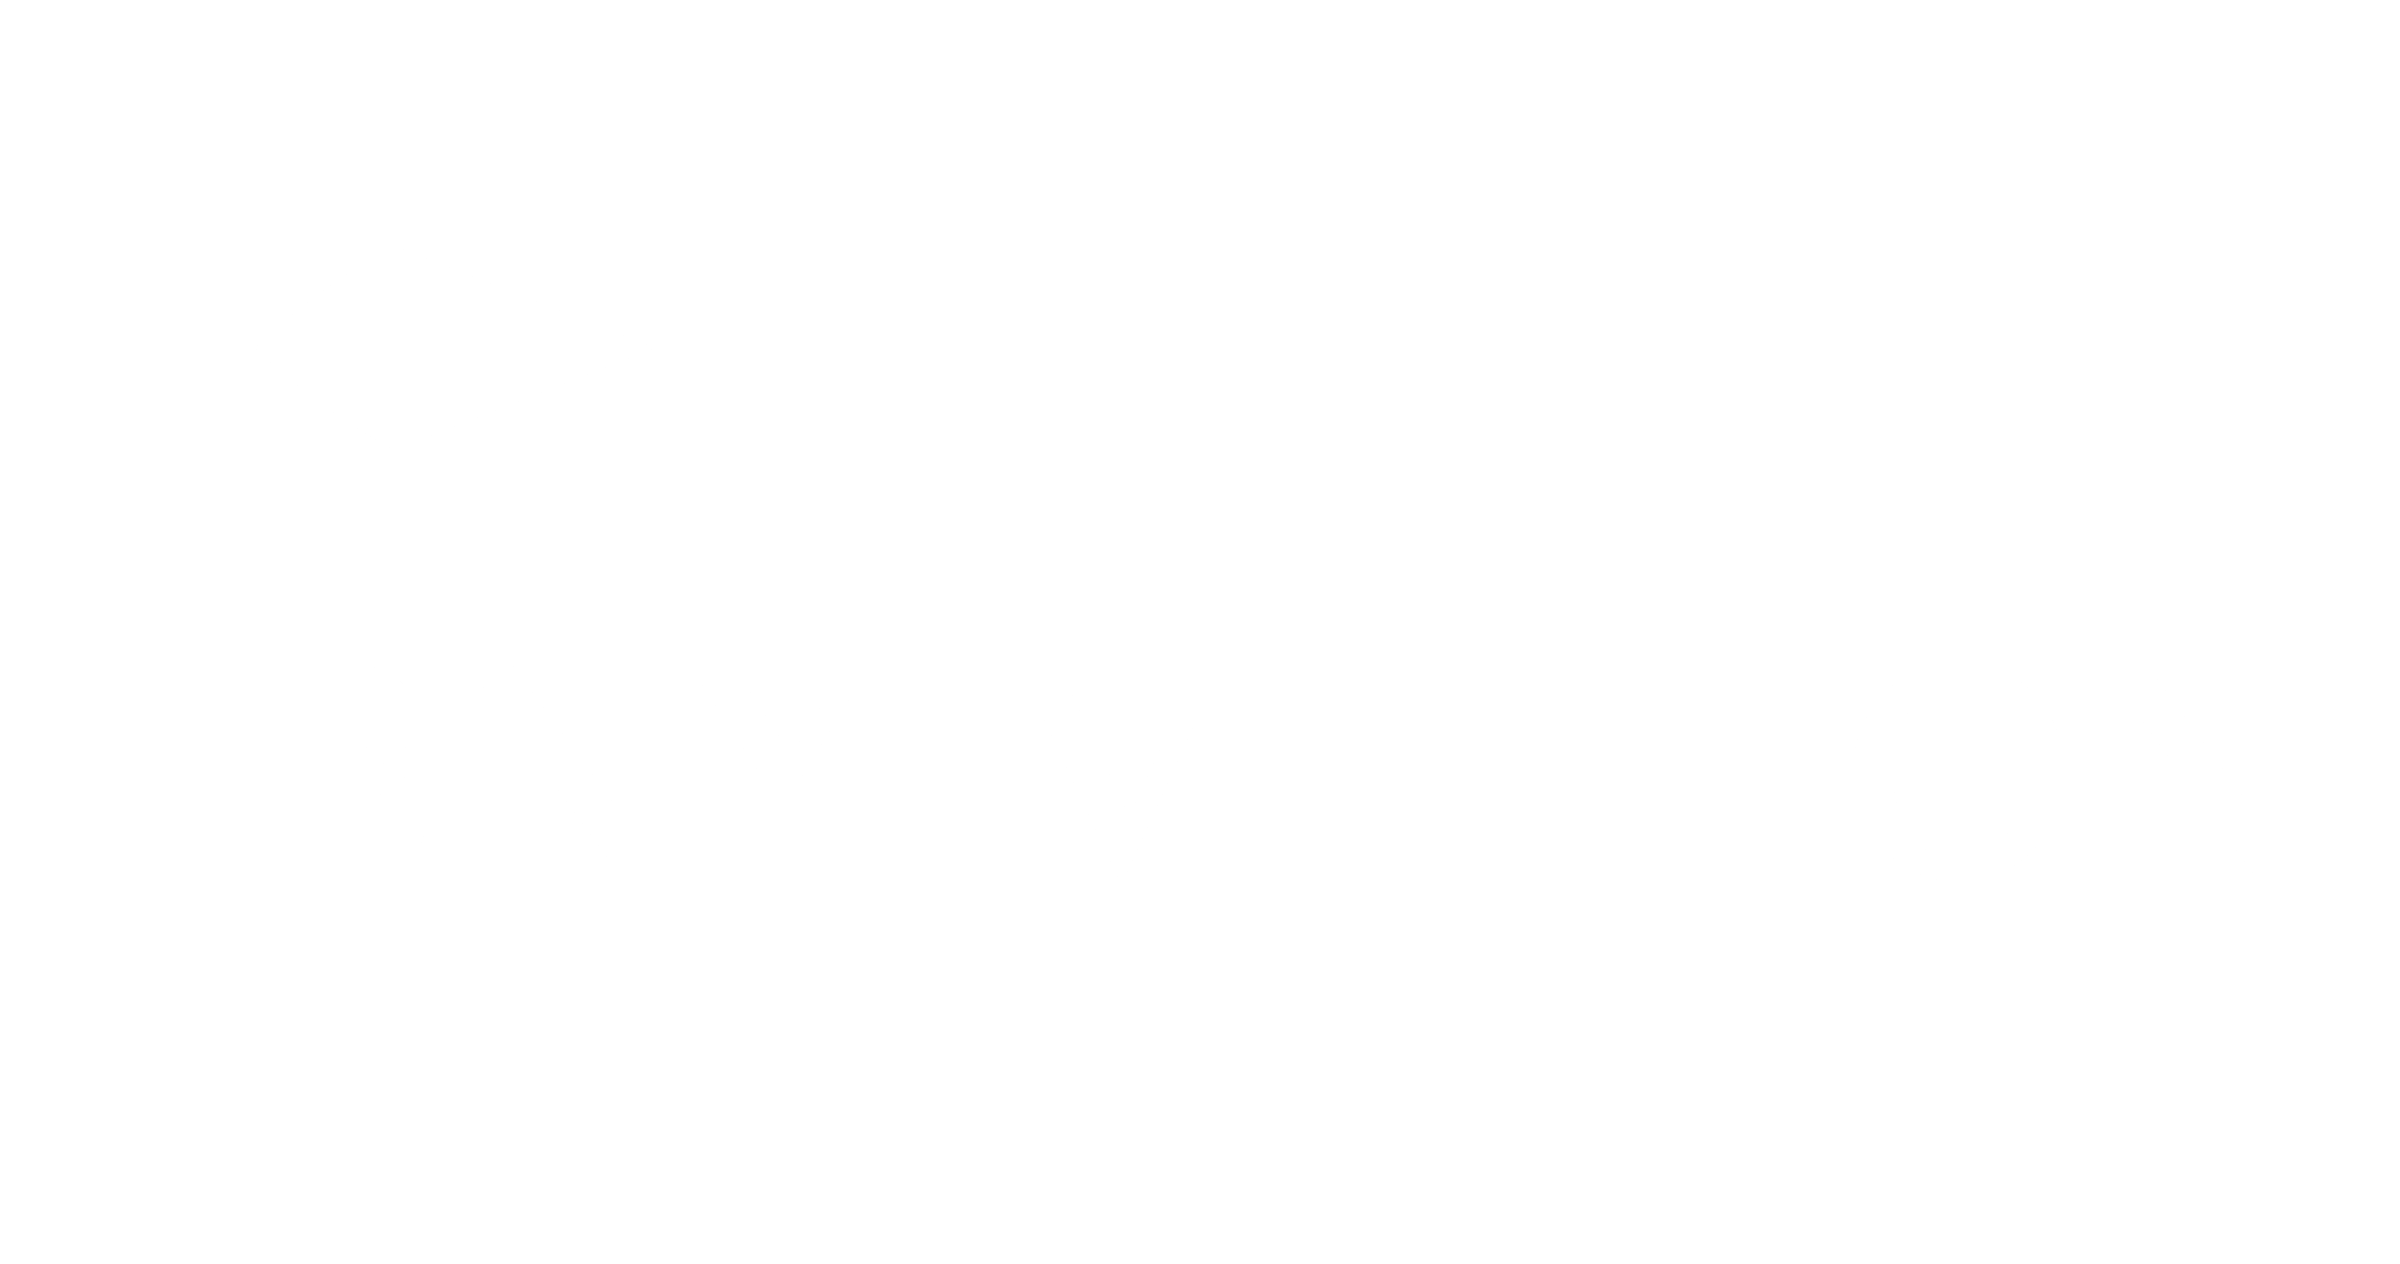 Bank of NY Mellon Logo - BNY Mellon Logo PNG Transparent & SVG Vector - Freebie Supply